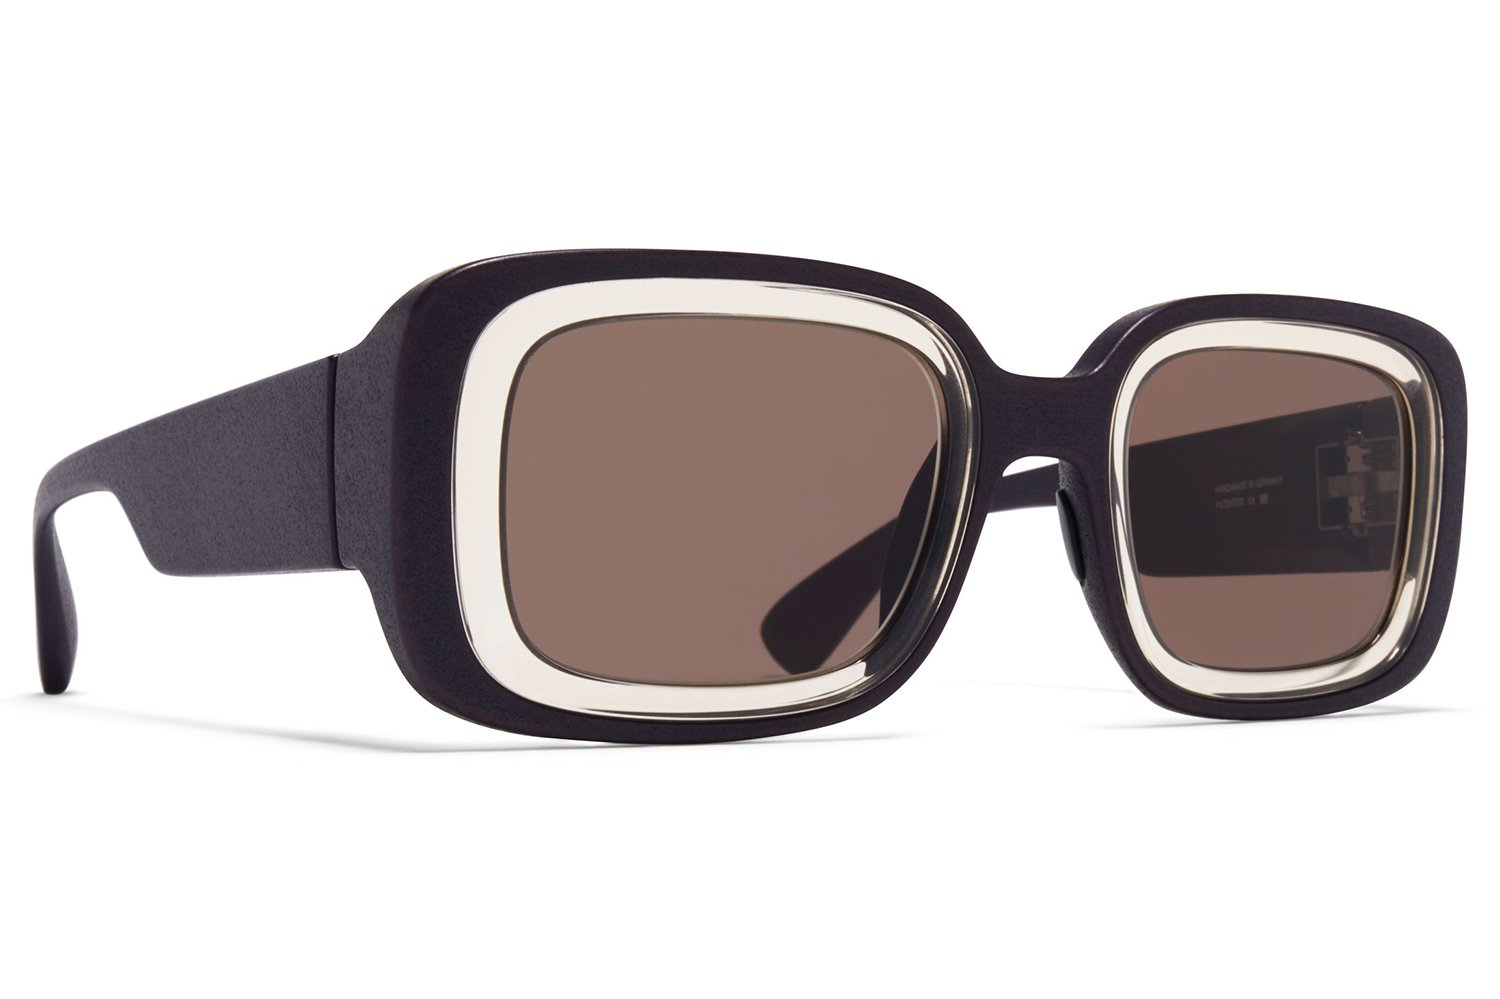 MYKITA | Studio 13.1 Sunglasses in MA3 - Slate Grey/Champagne with Terra Solid Lenses